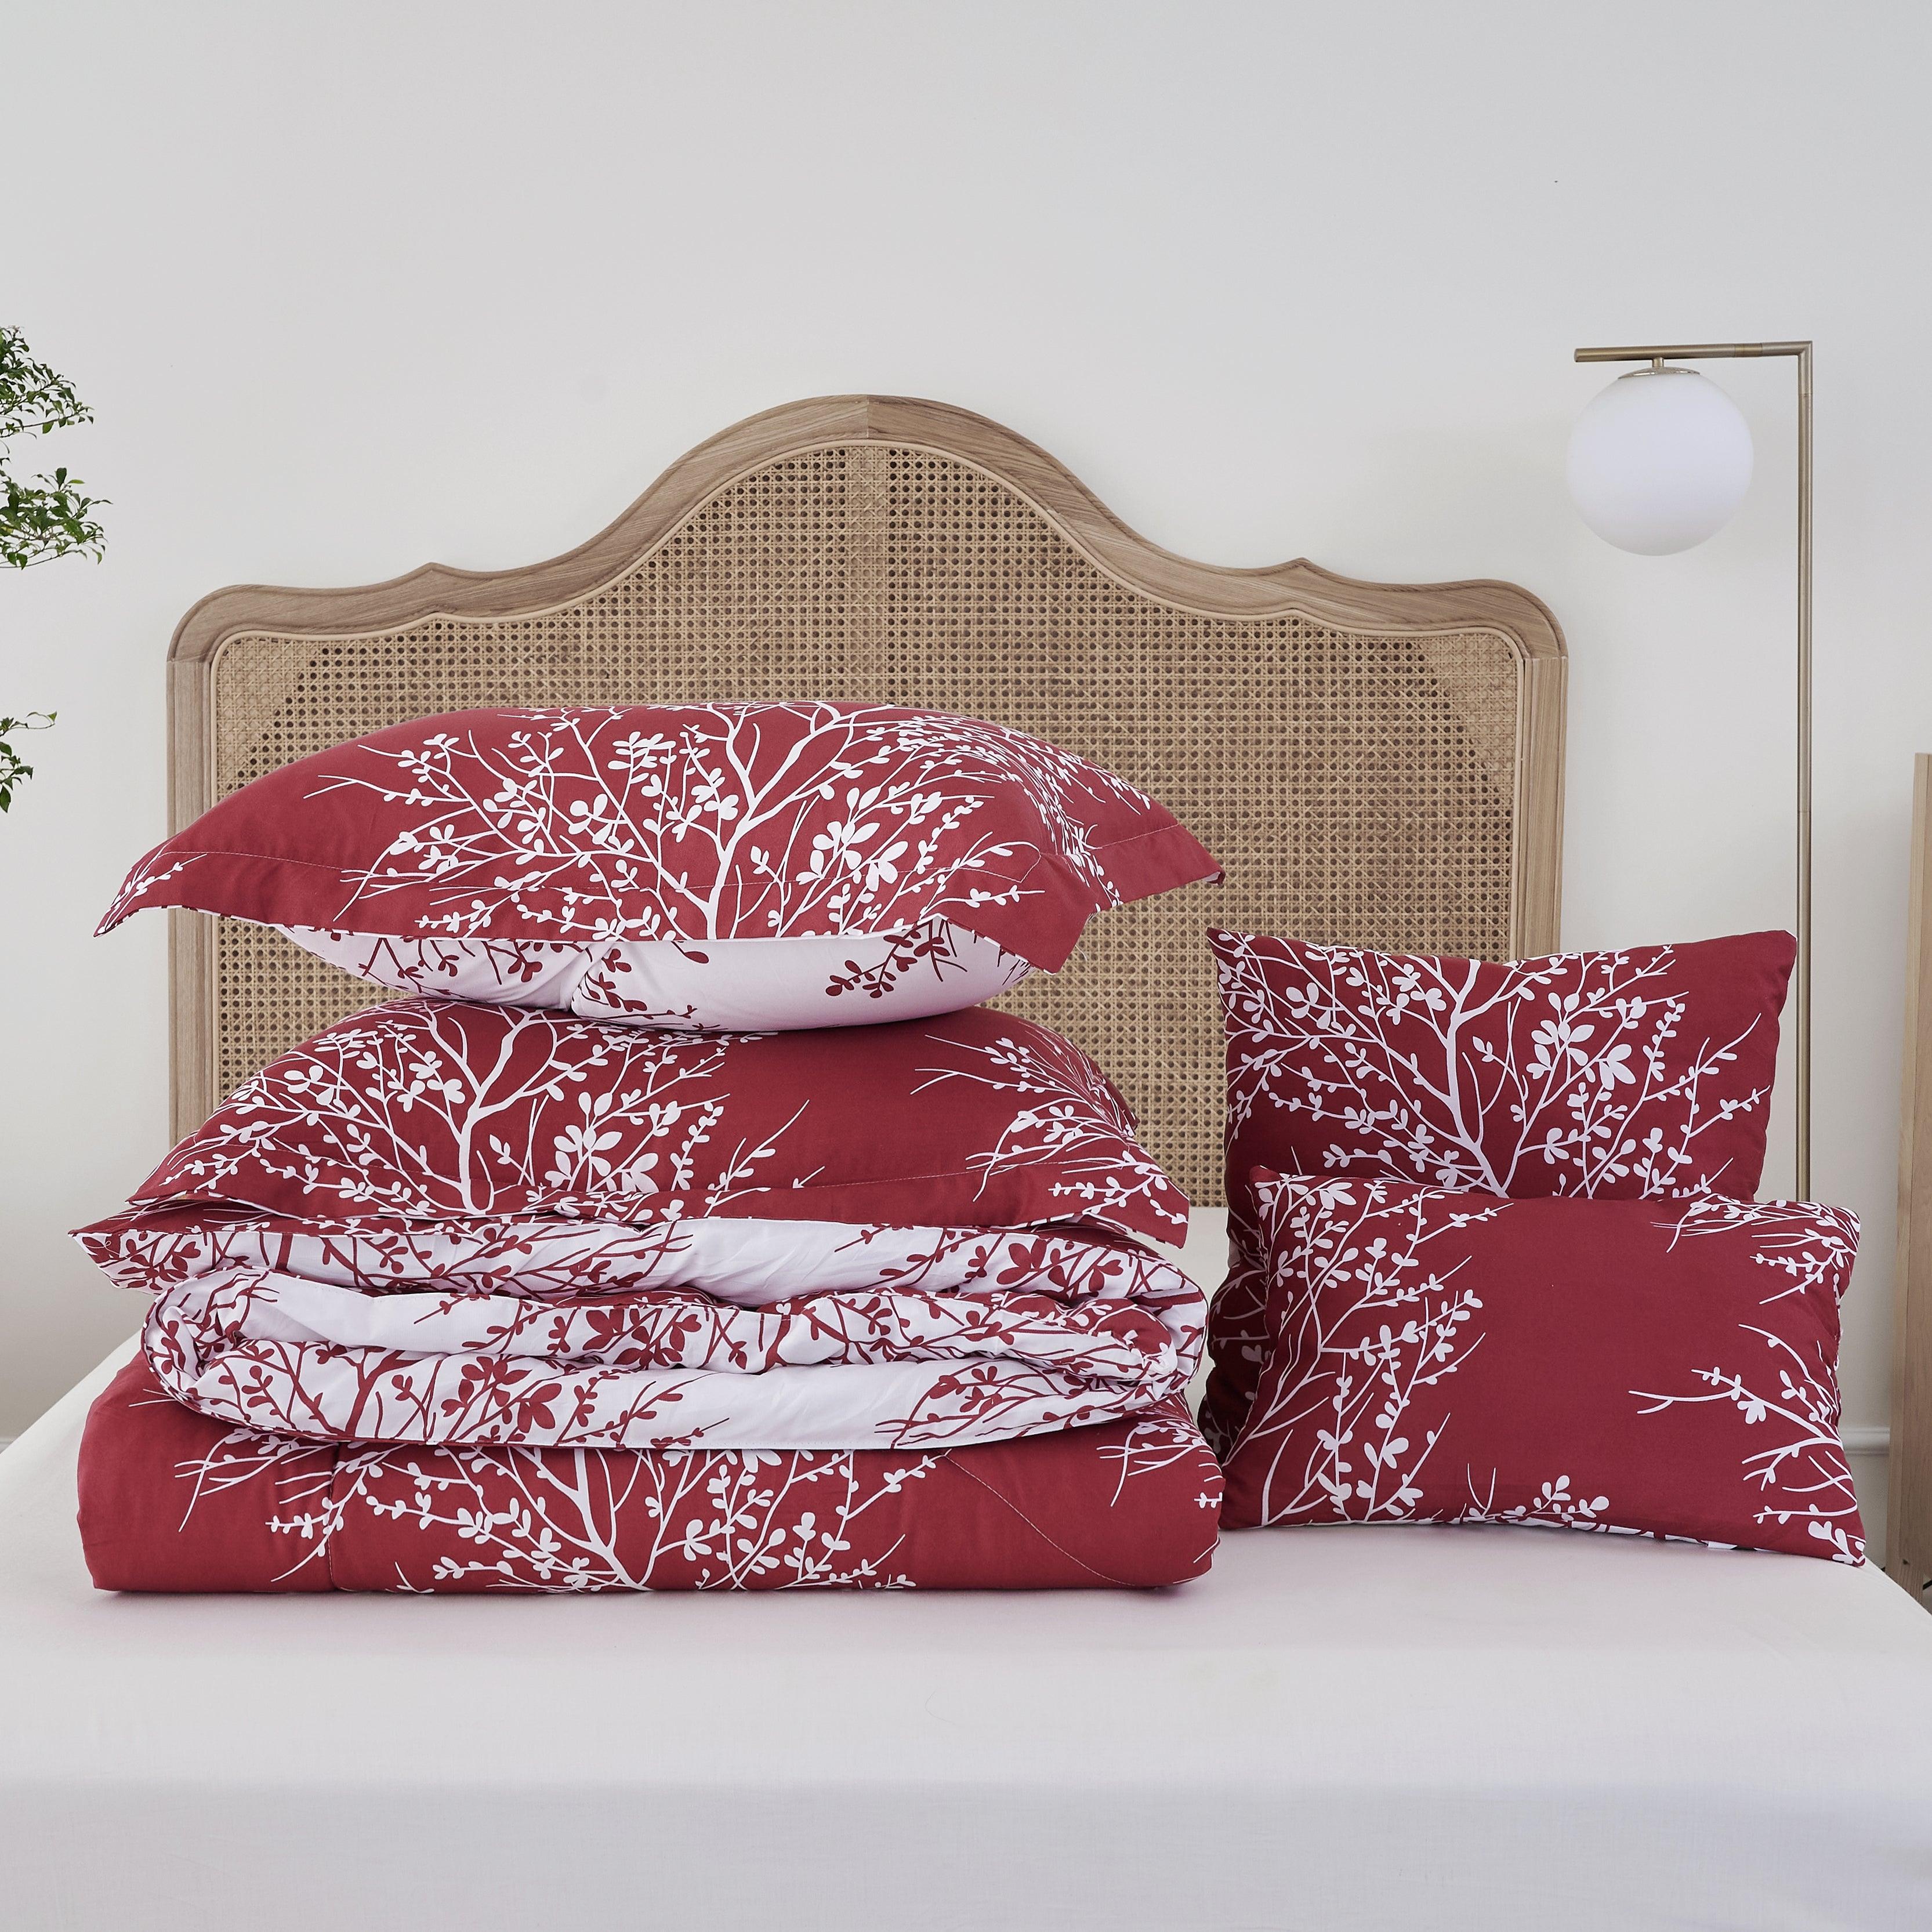 Foliage Reversible Comforter Set + Two Free Sham Pillows - Spirit Linen - Burgundy